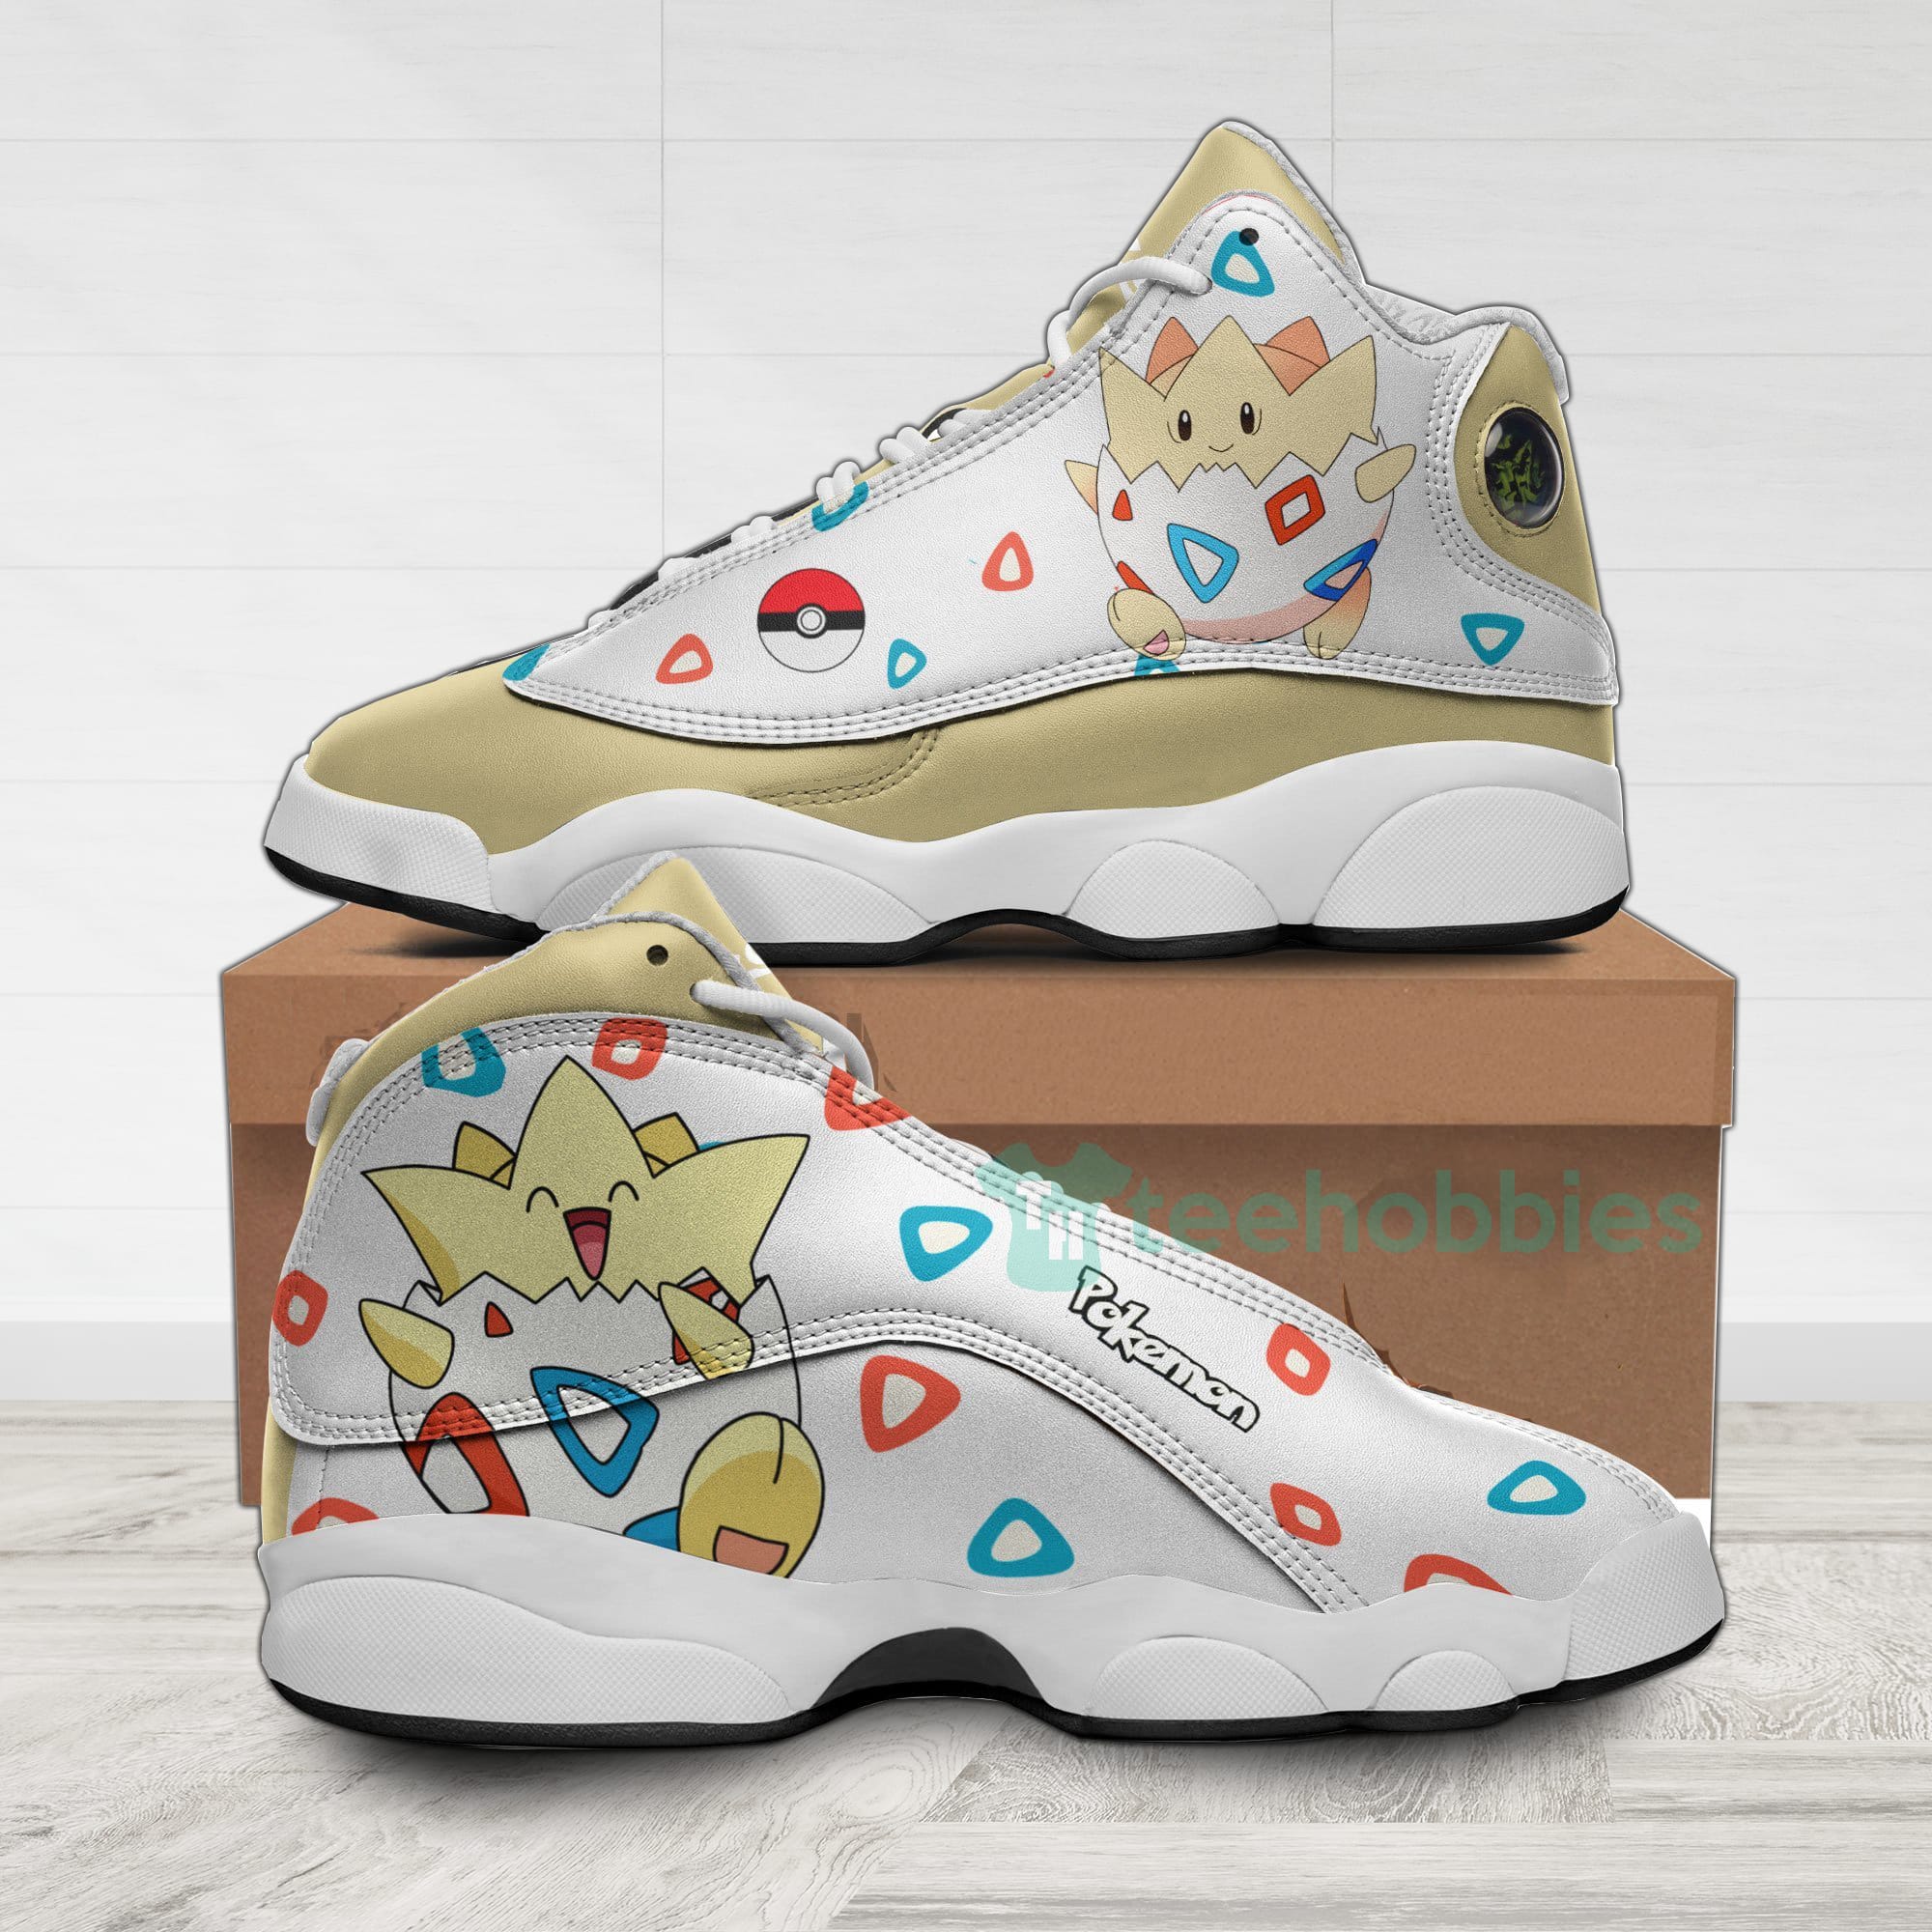 Togepi Custom Pokemon Anime Air Jordan 13 Shoes